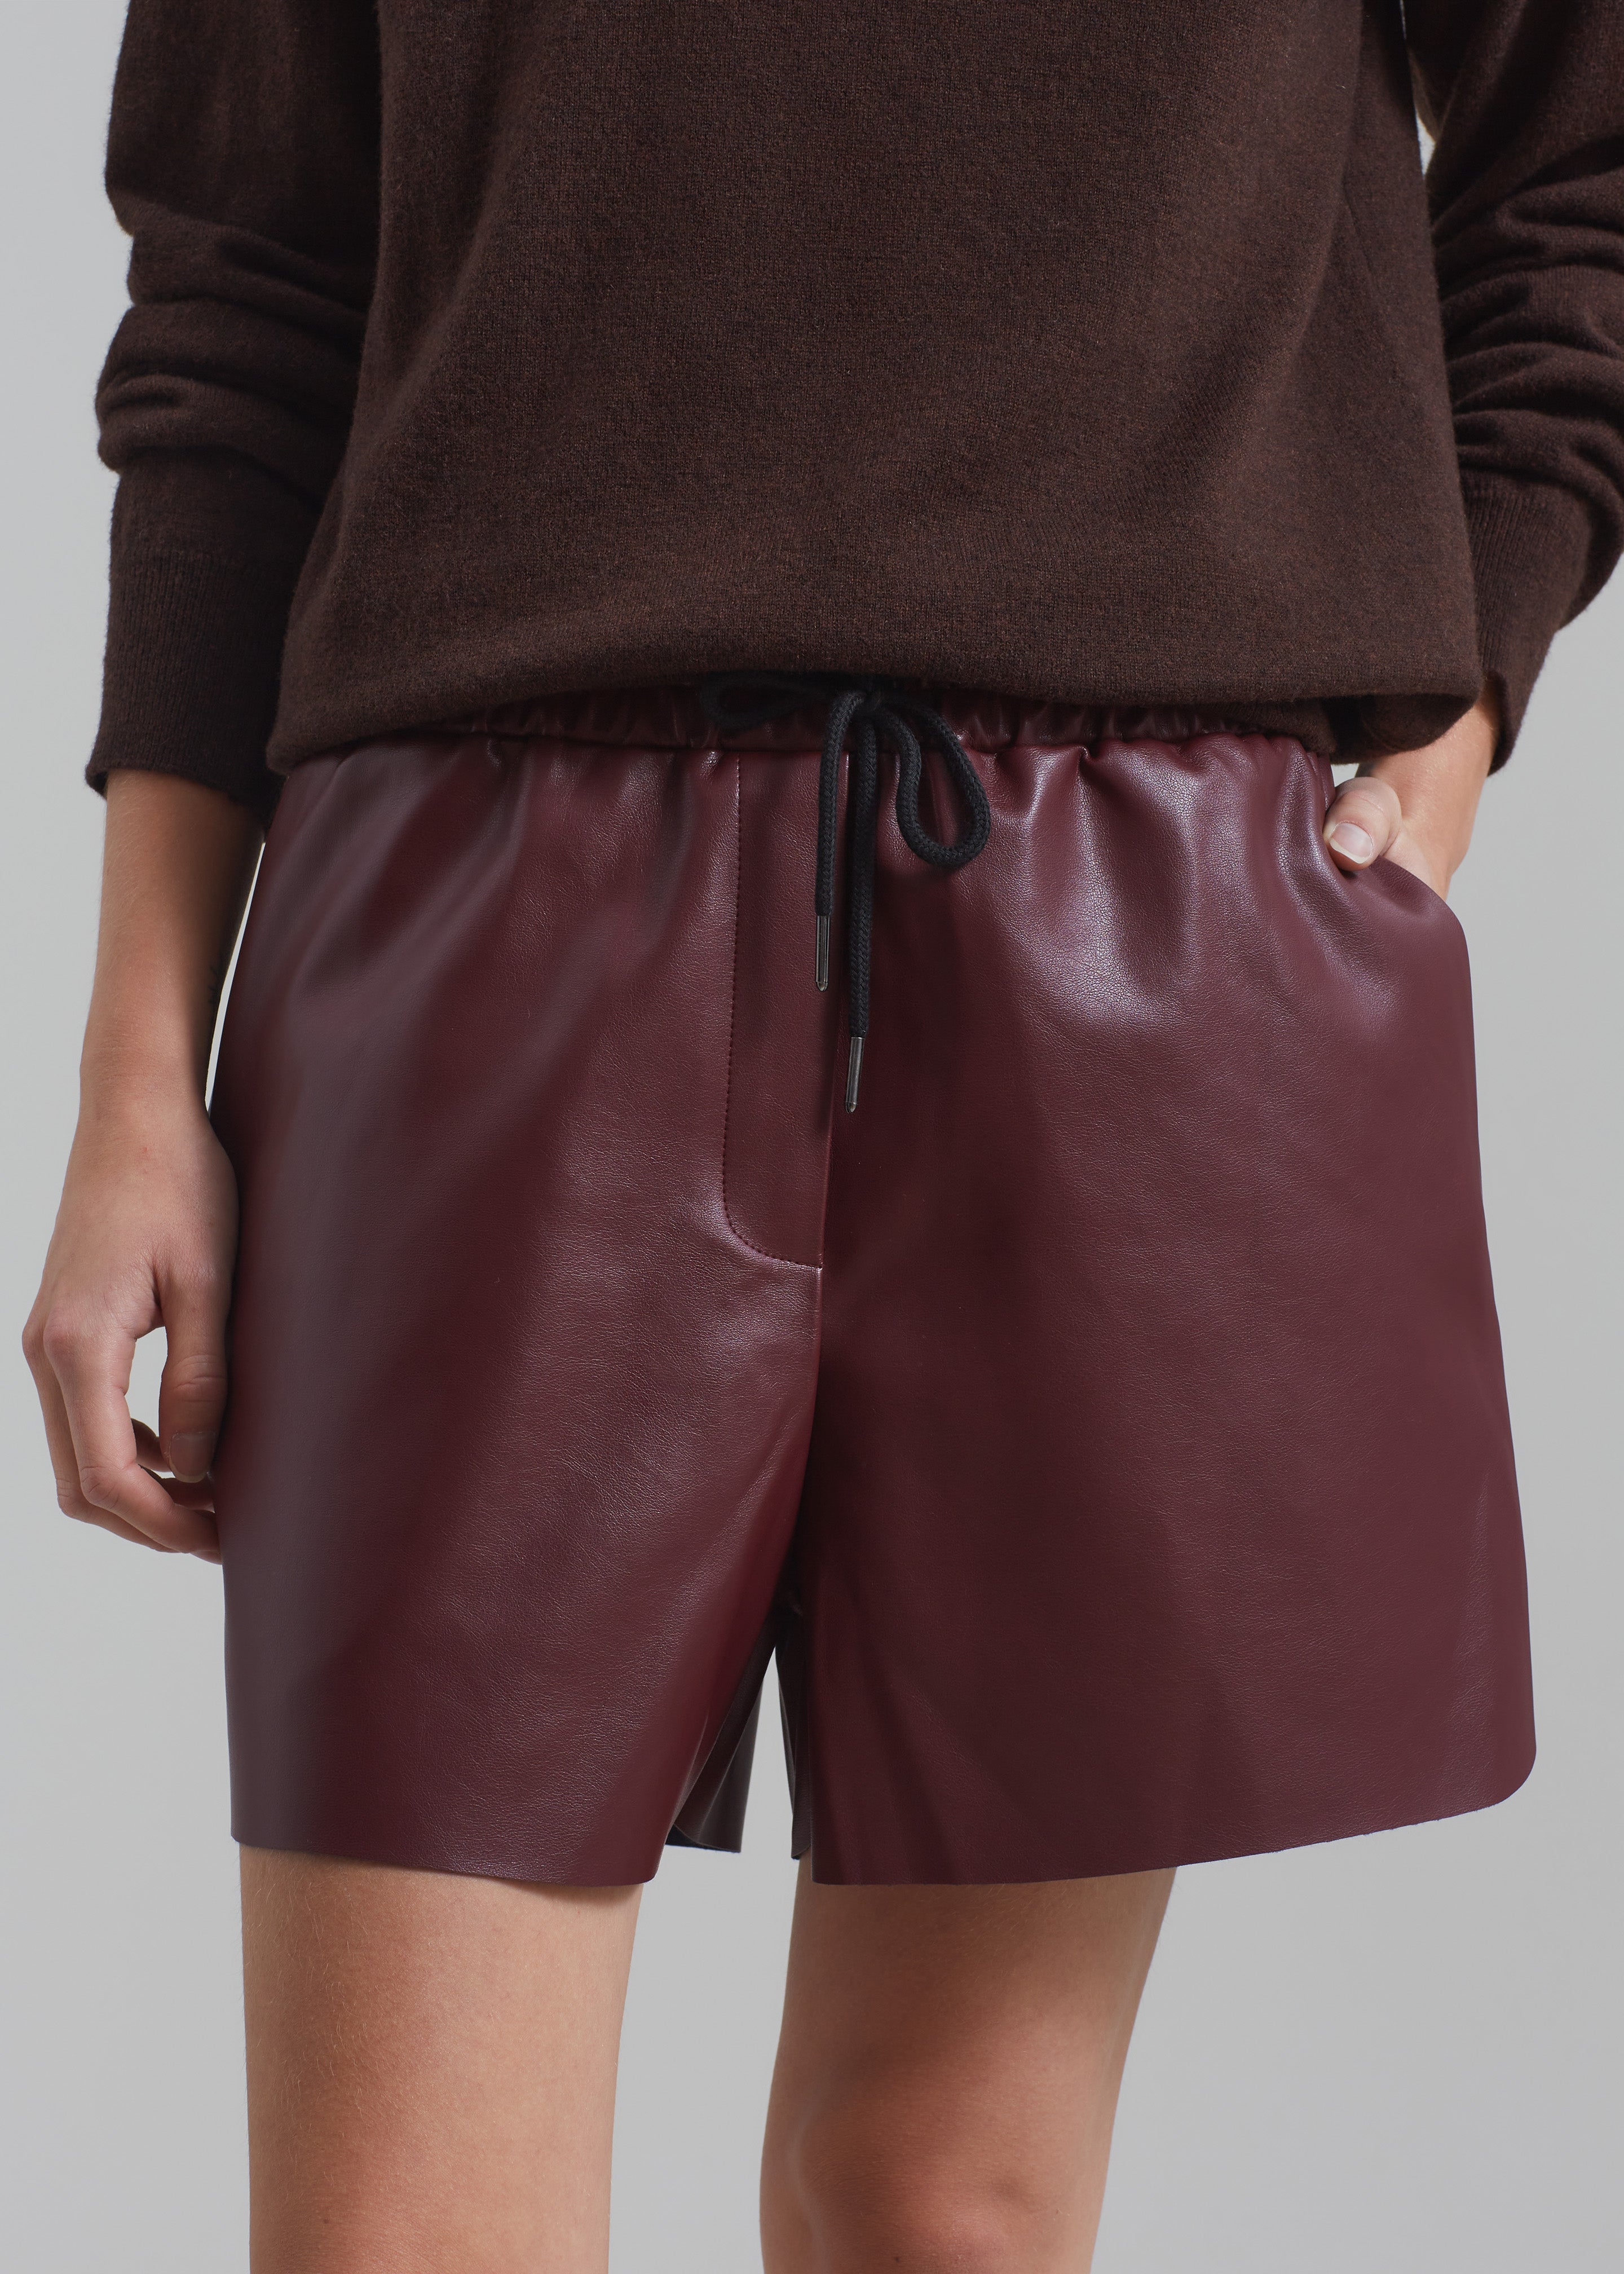 Kine Faux Leather Shorts - Burgundy - 2